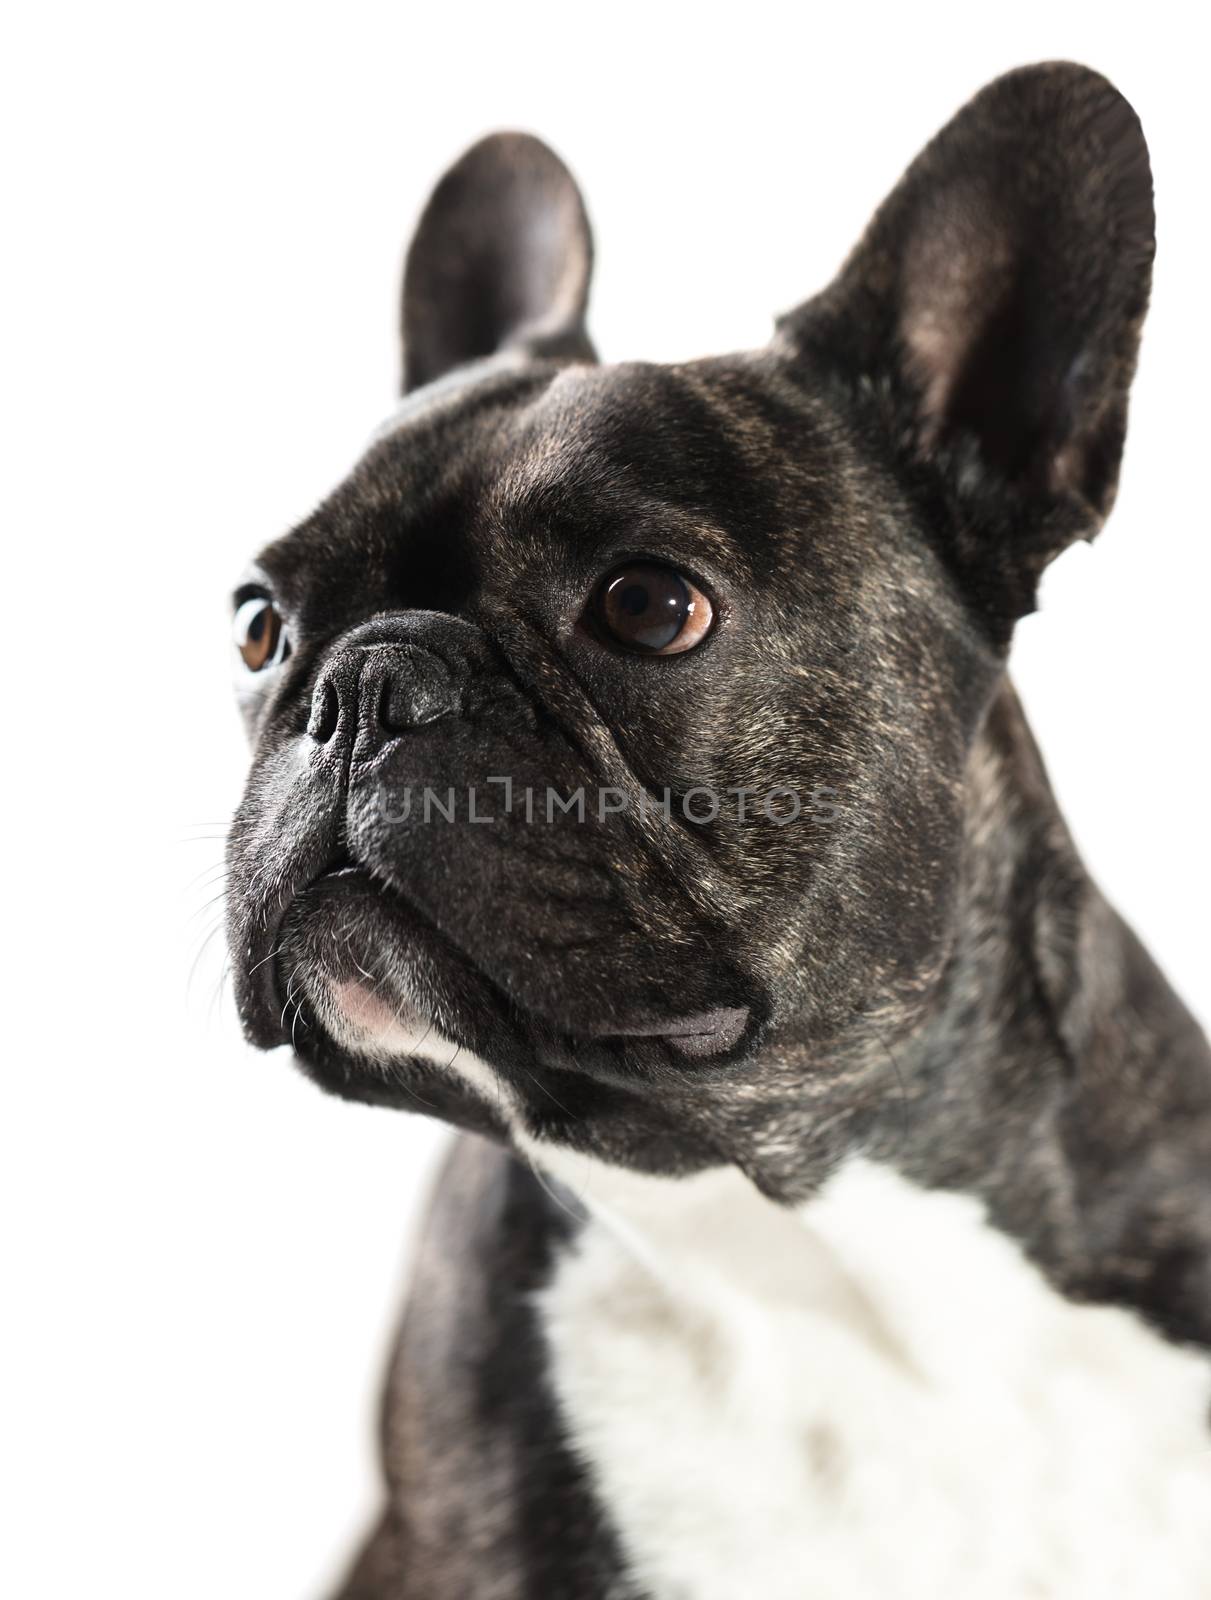 French Bulldog dog close-up by MegaArt